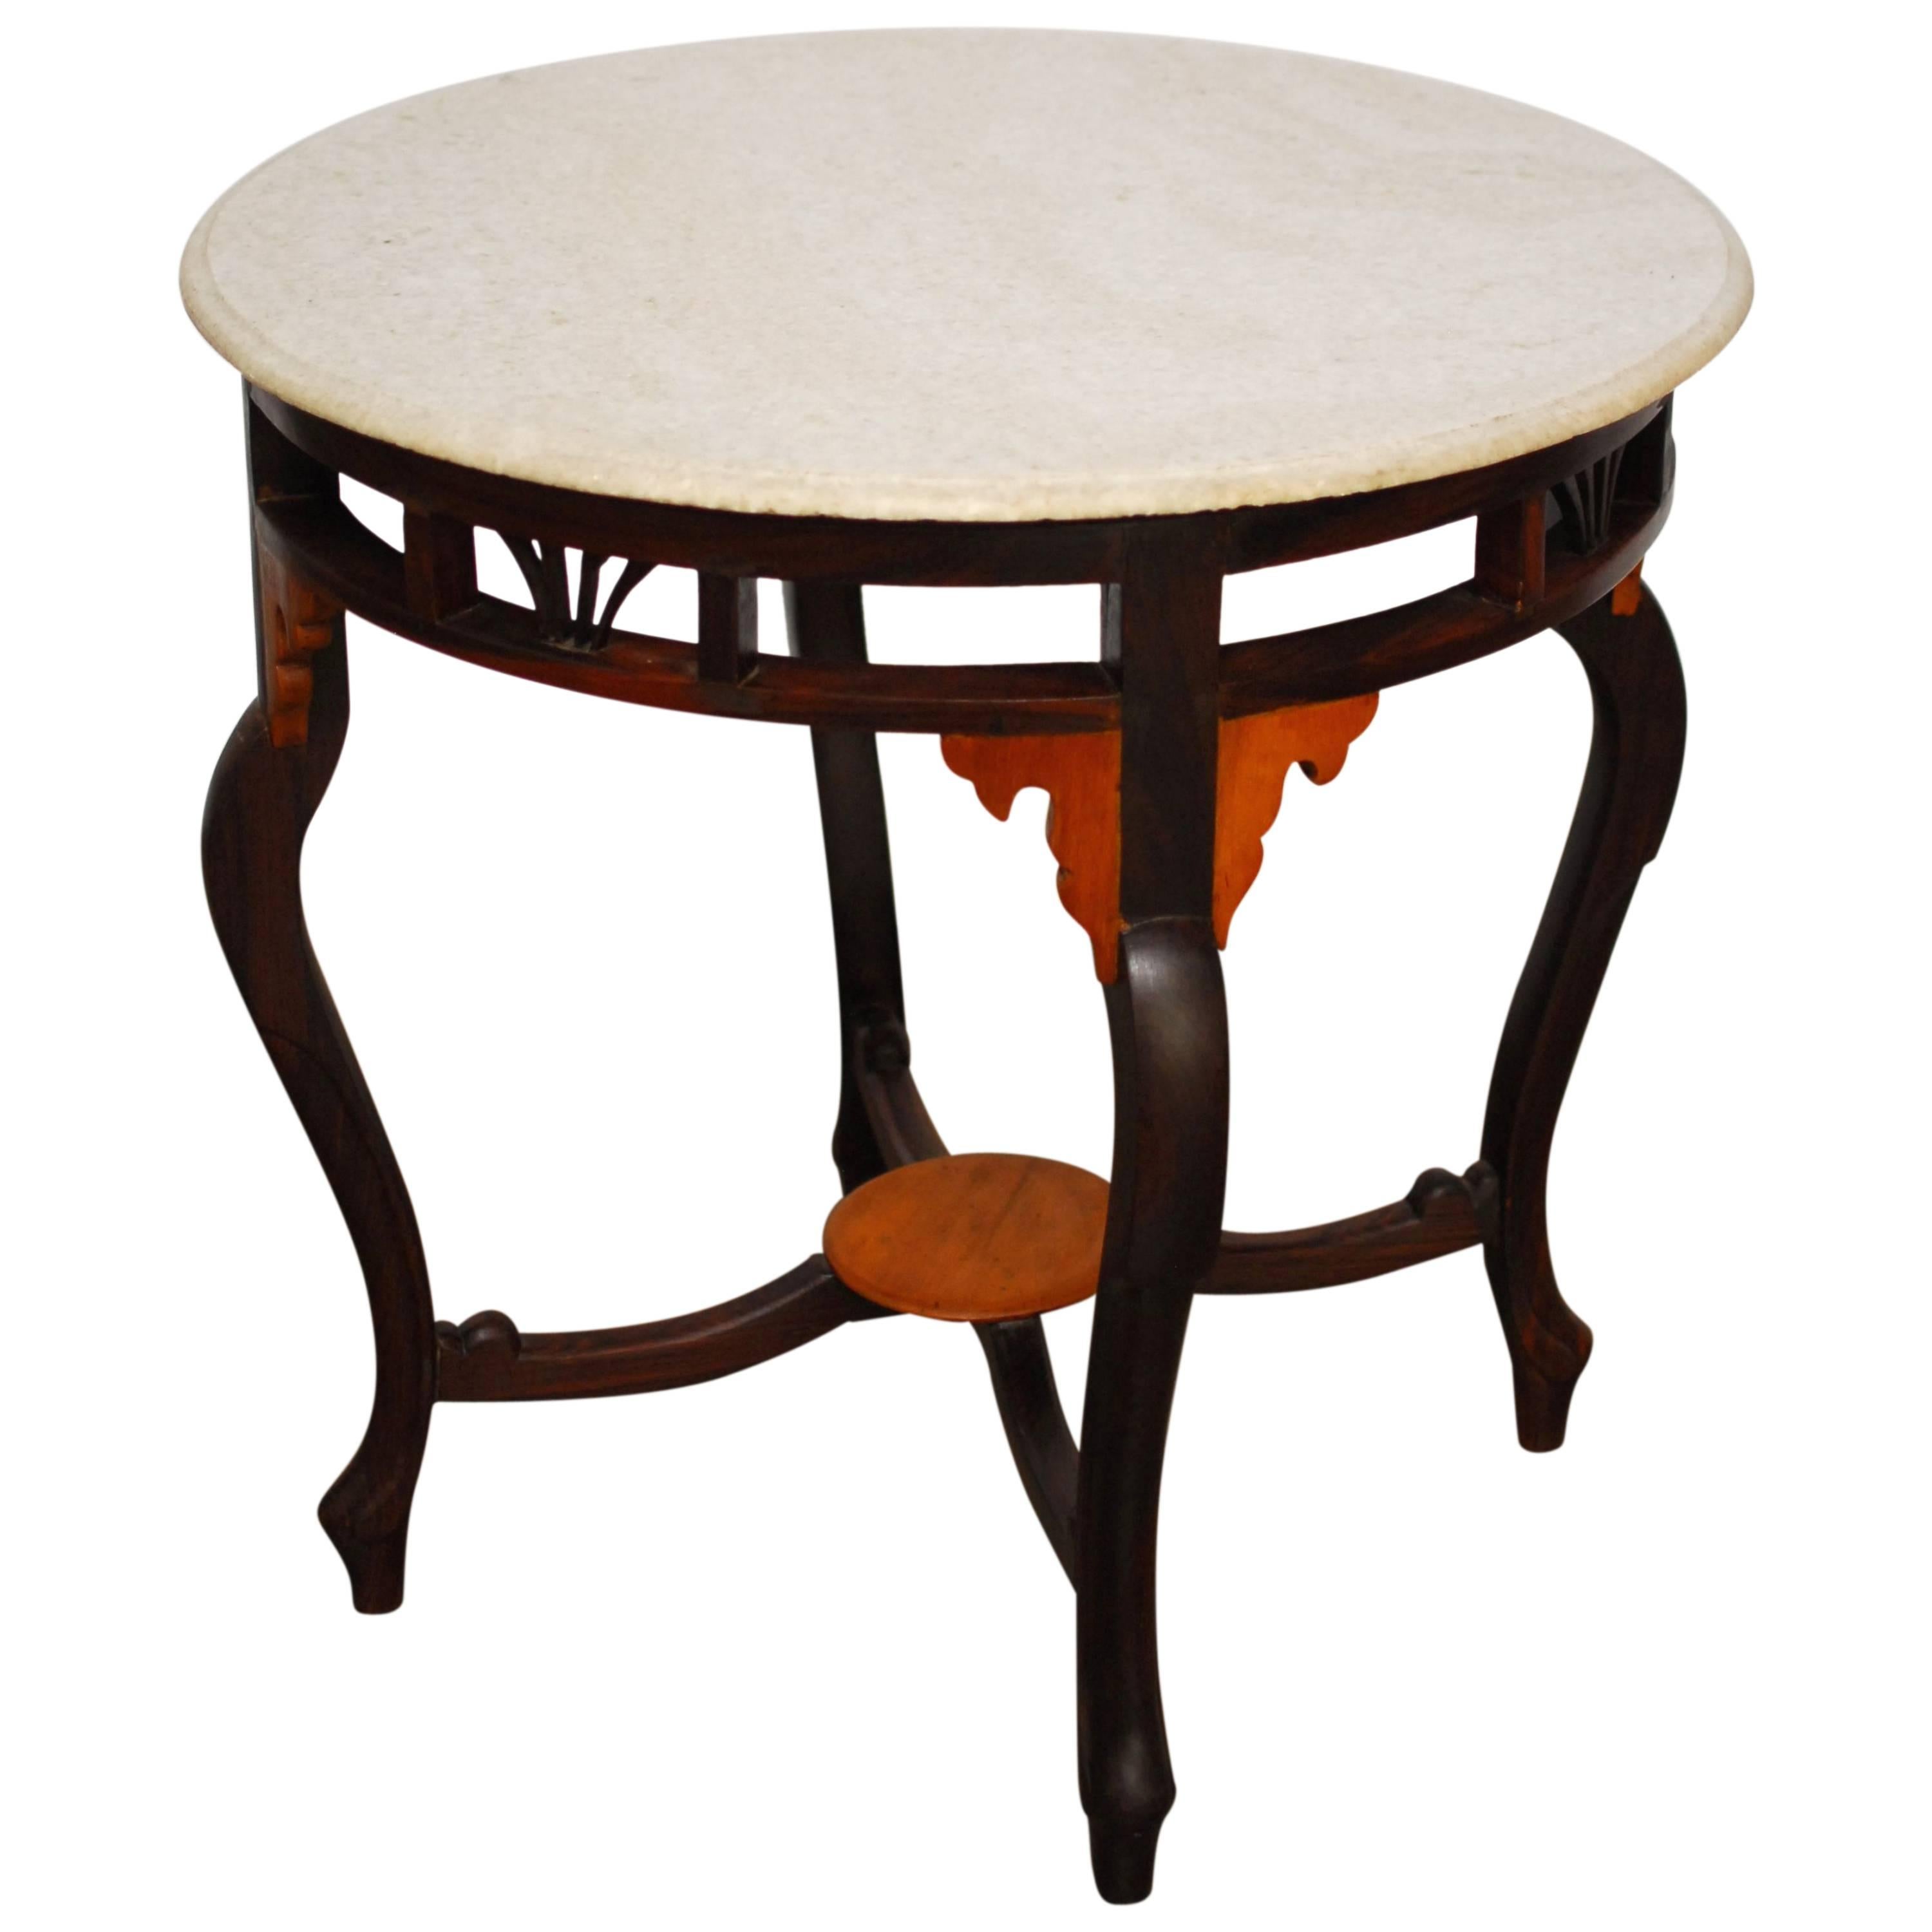 Art Nouveau Style Marble Top Round Table